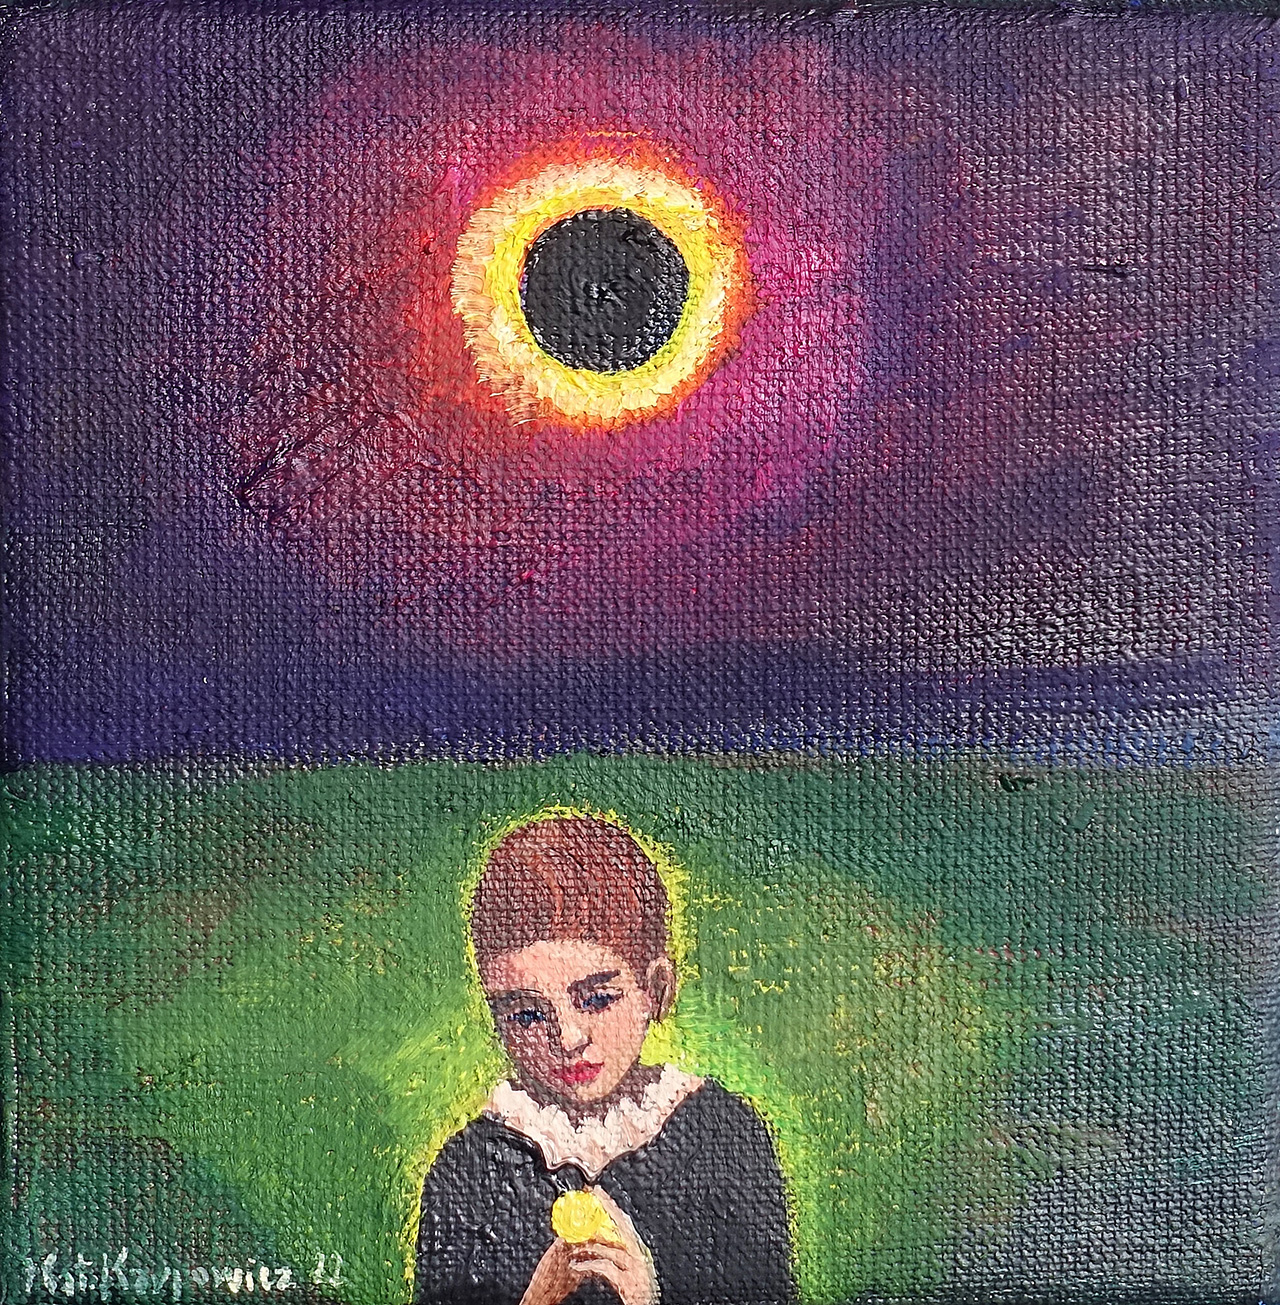 Katarzyna Karpowicz - Little gift (Black hole sun) (Oil on Canvas | Size: 15 x 15 cm | Price: 6000 PLN)